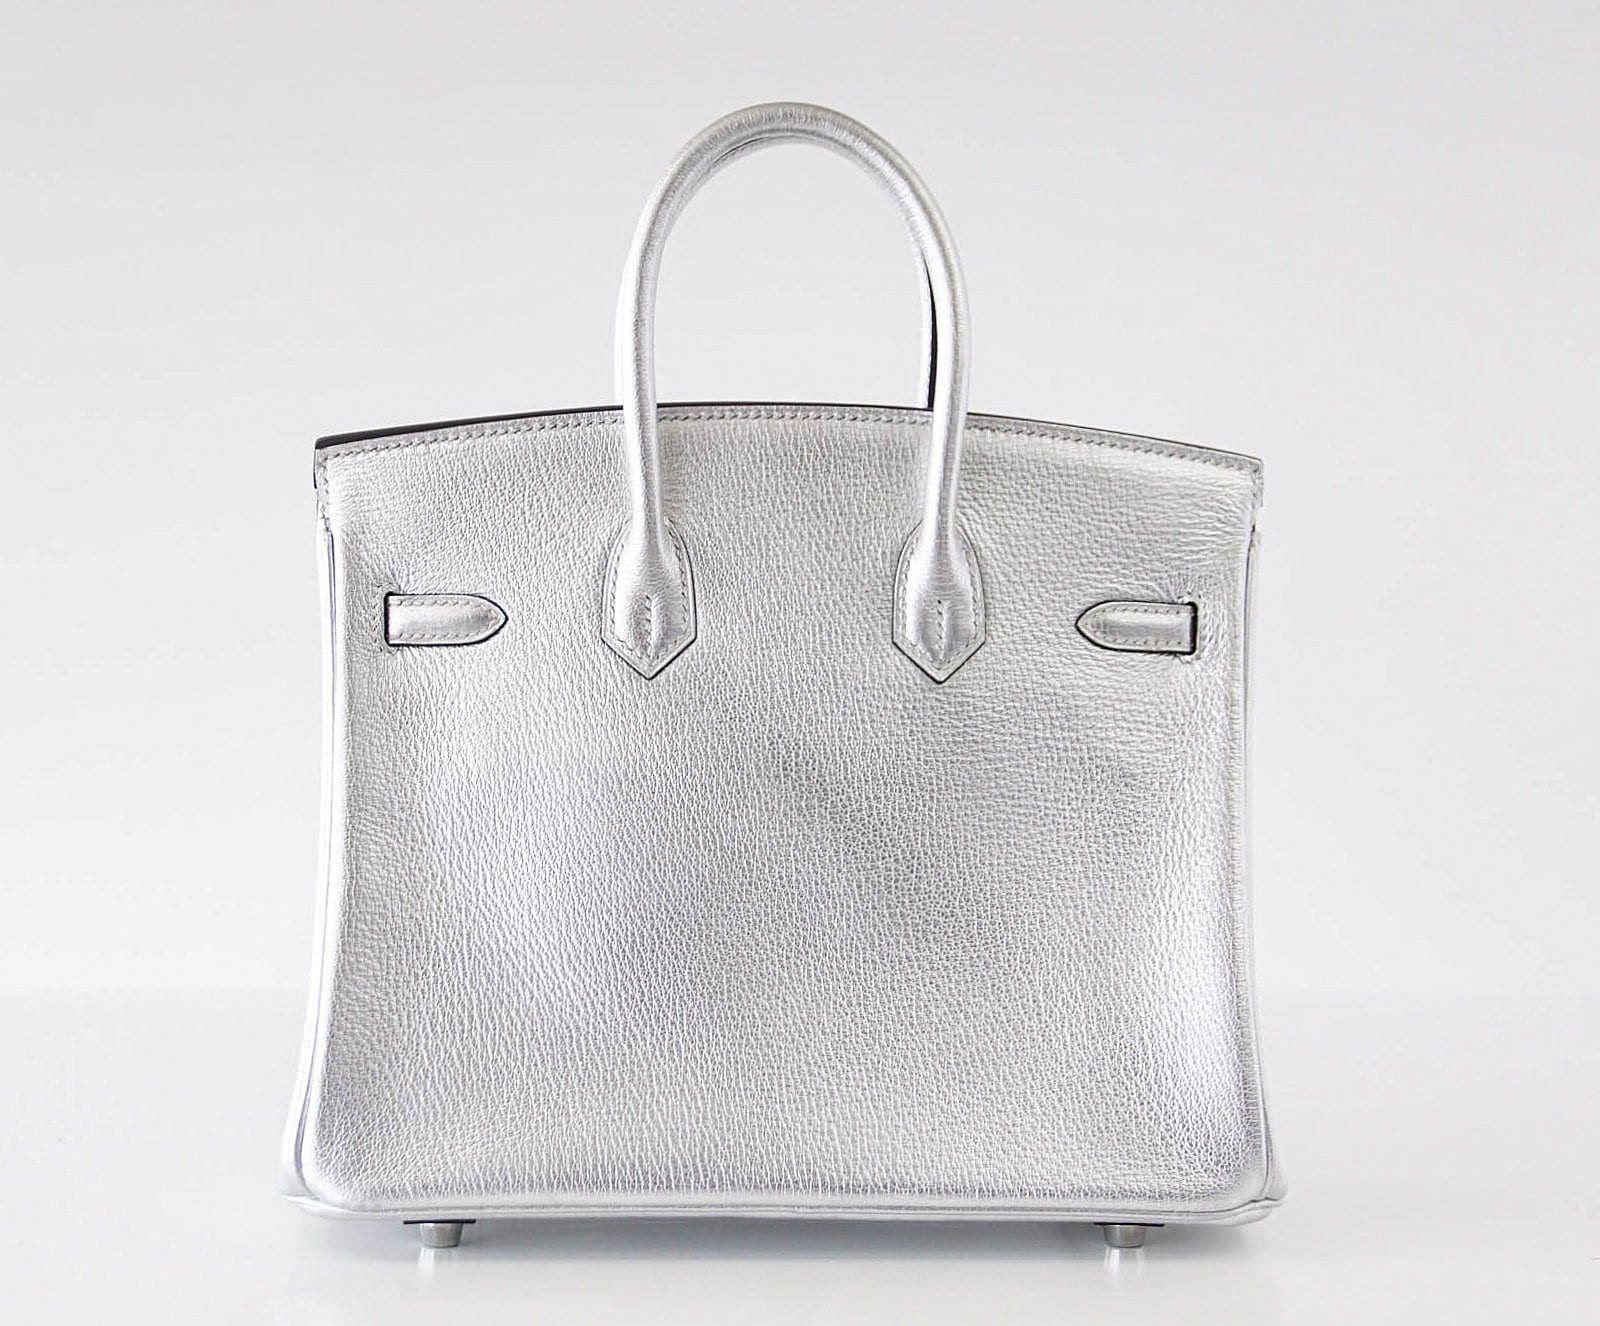 Hermes Gris Mouette New Grey 30cm Togo Birkin Bag Palladium Perle So Chic